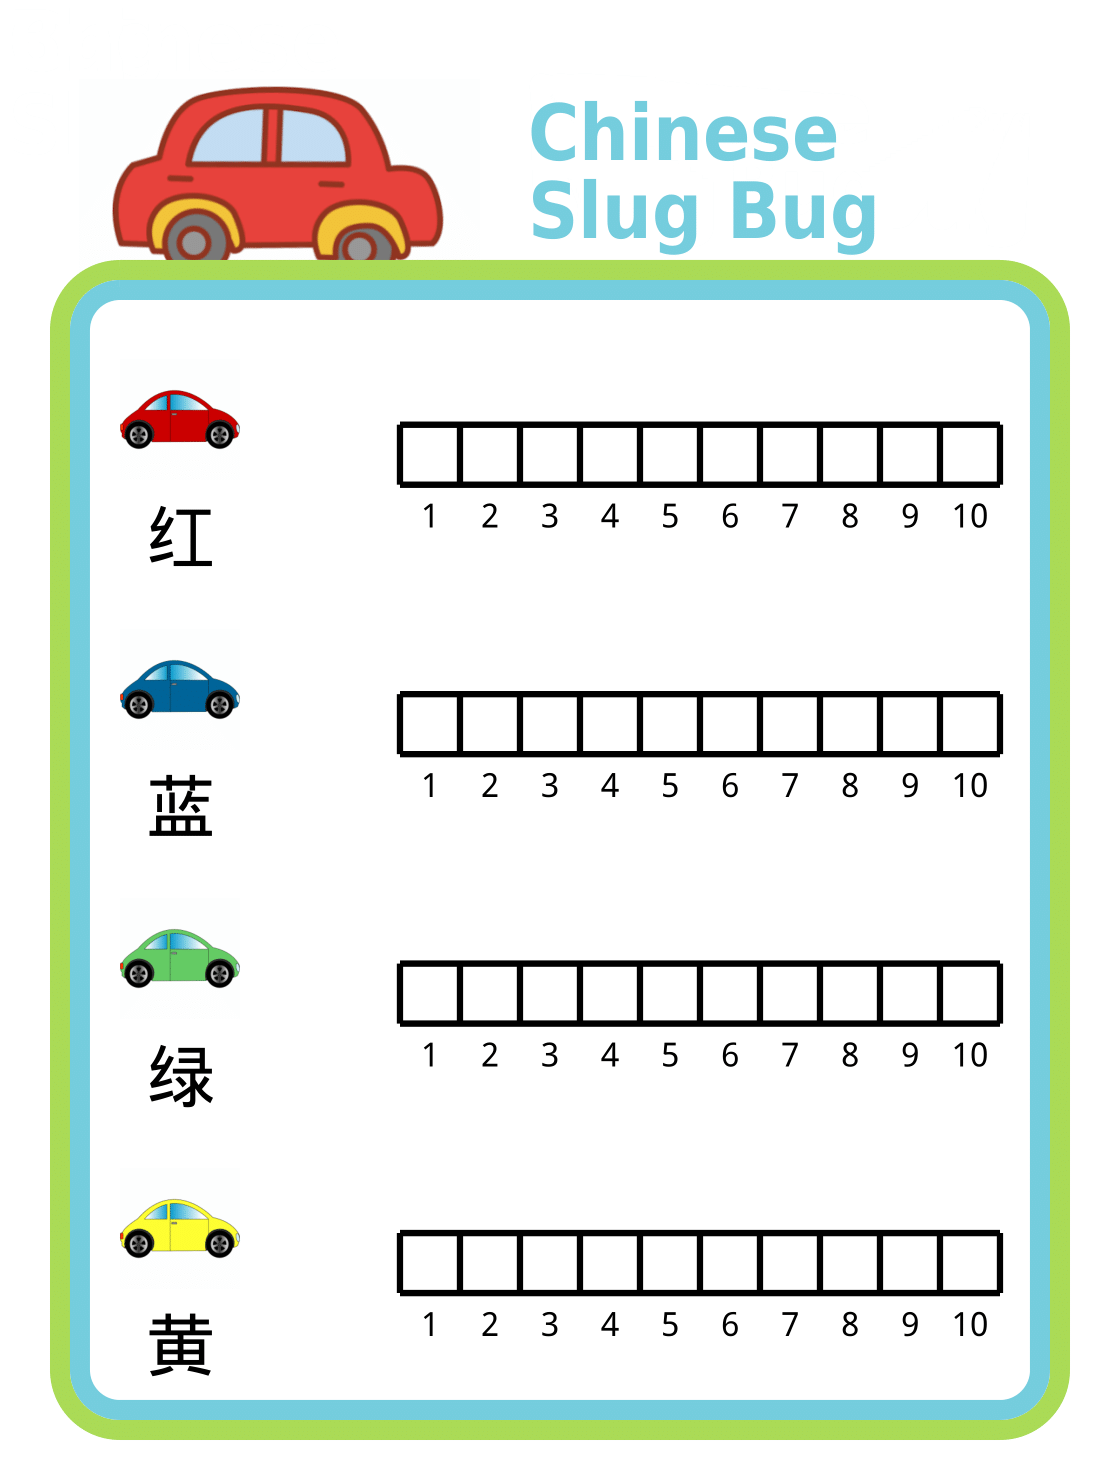 Slug bug game in chinese